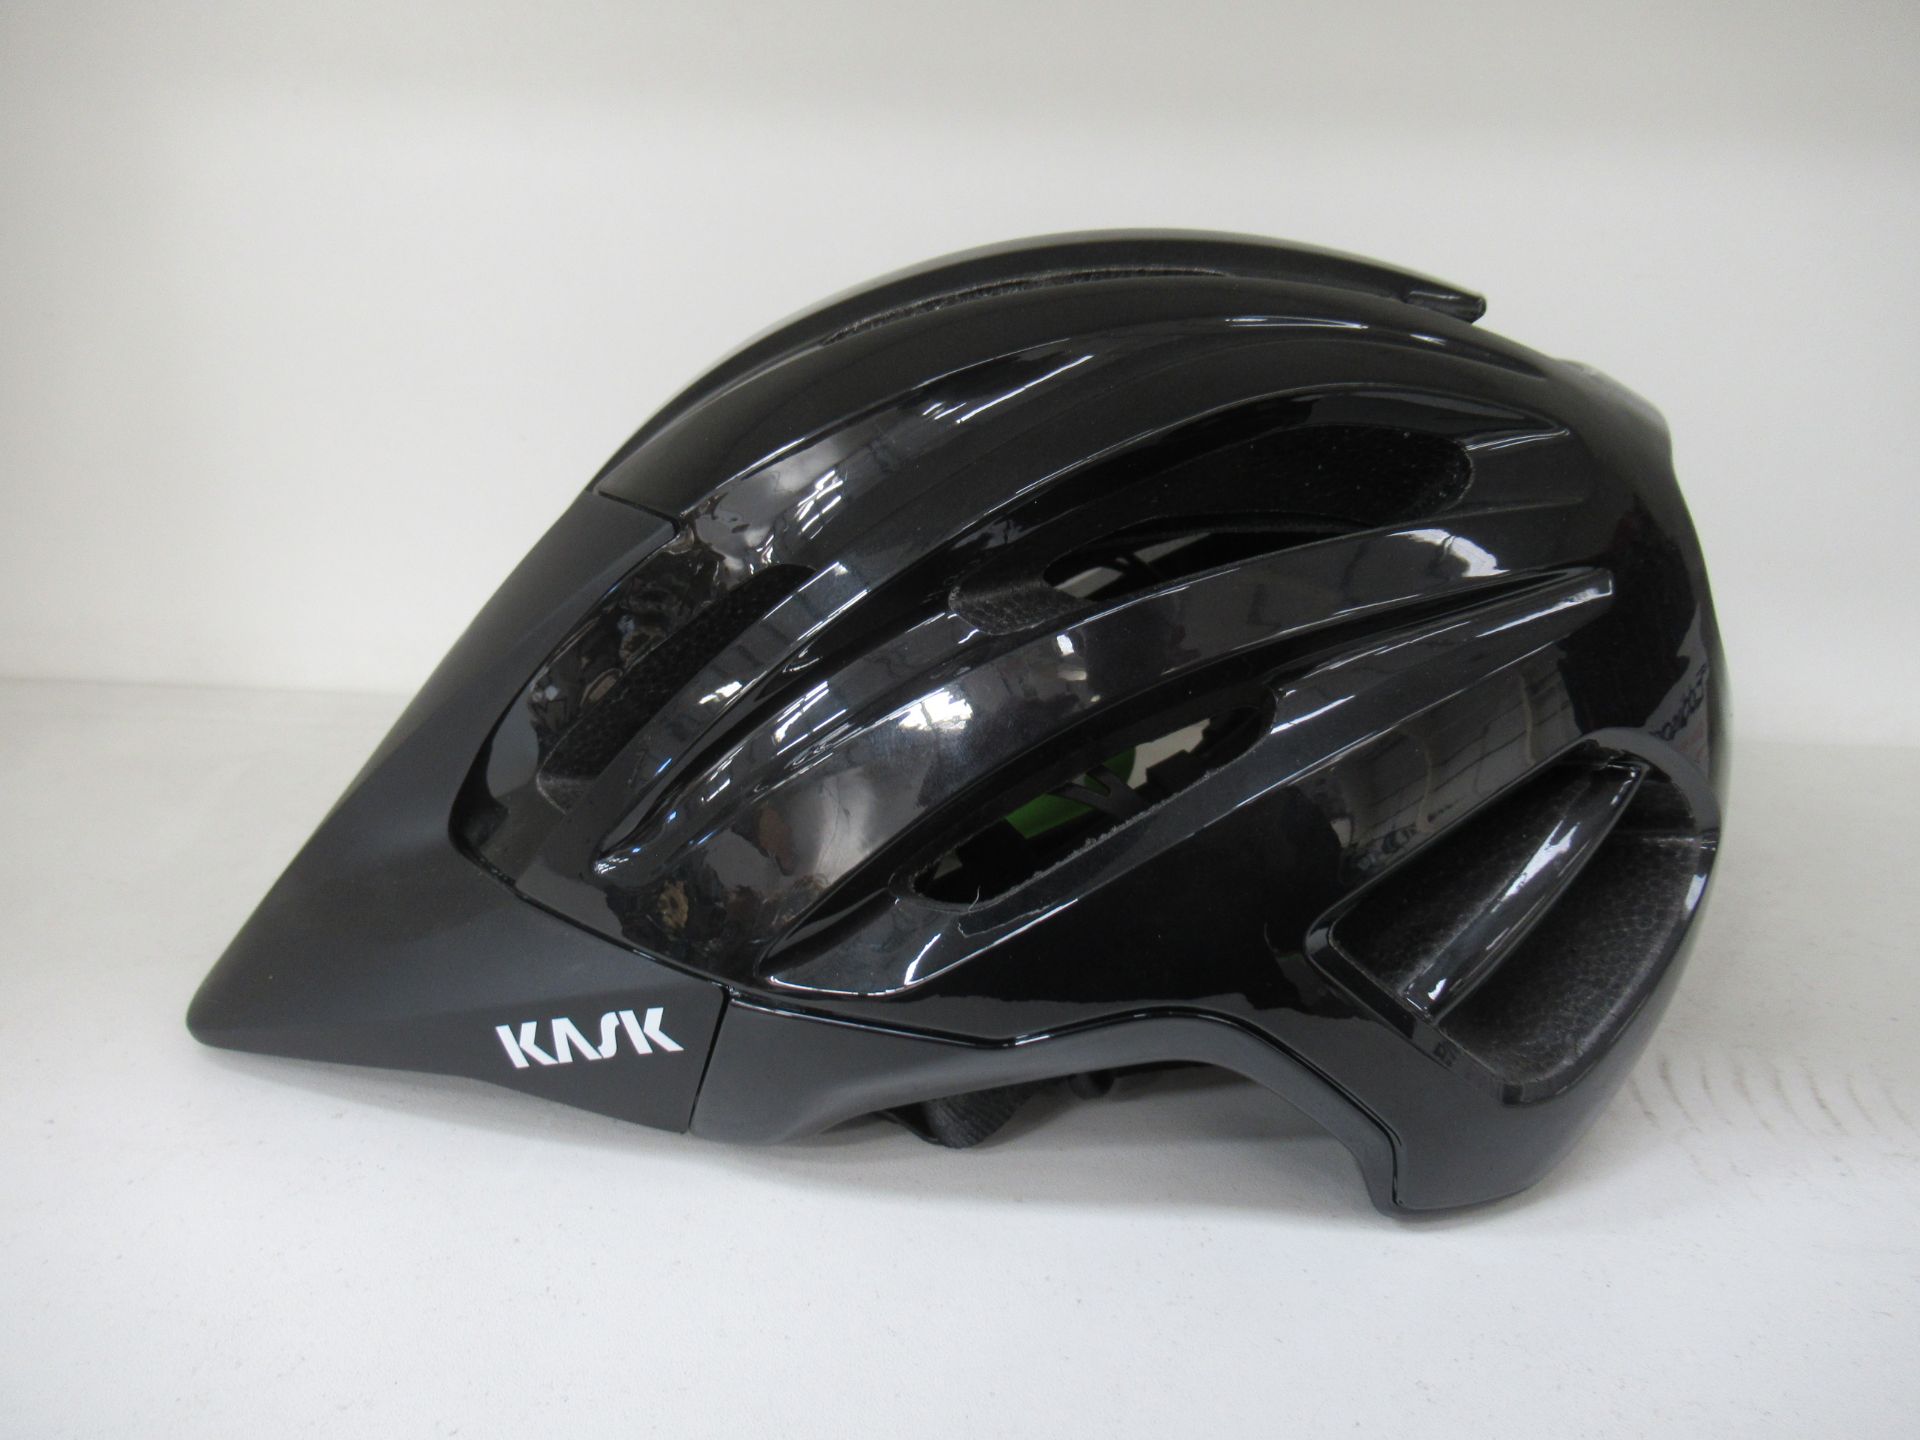 KASK Caipi black medium sized helmet - boxed (RRP£129)